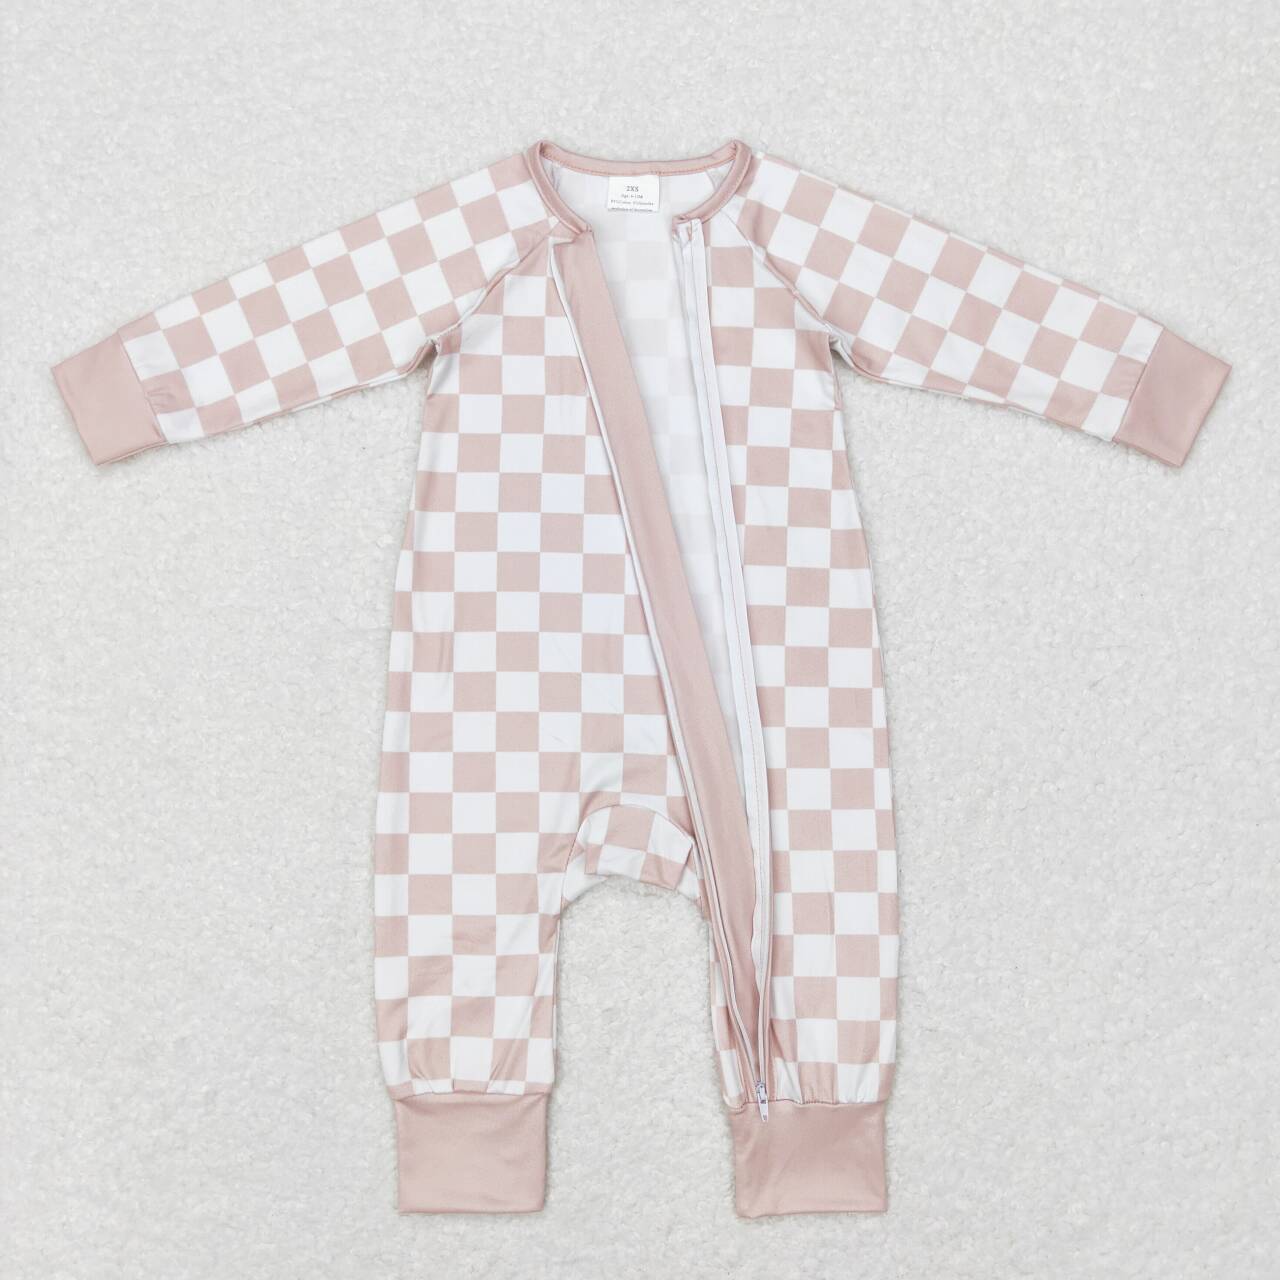 Khaki checkered infant zip sleeper